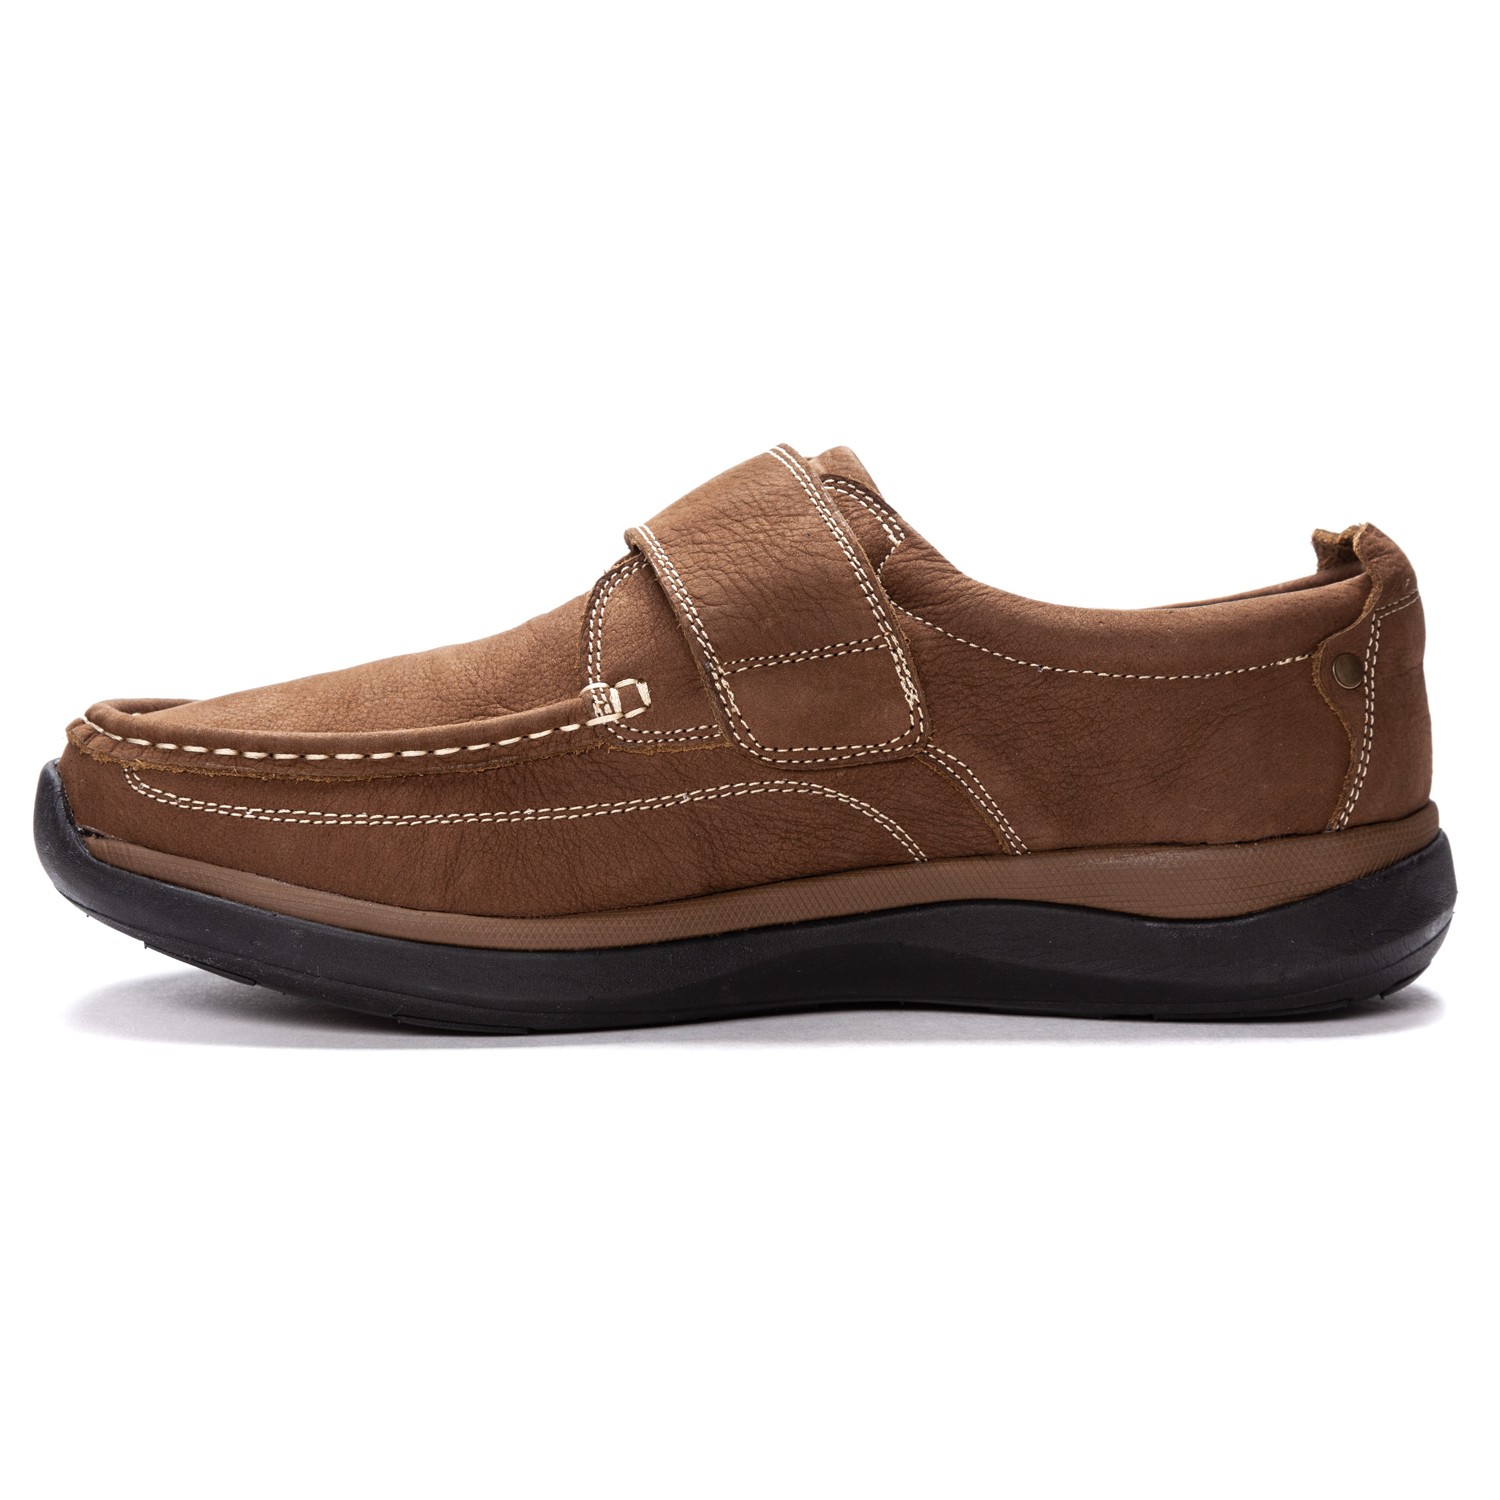 Propet Men's Porter Loafer Casual Shoes - image 3 of 6